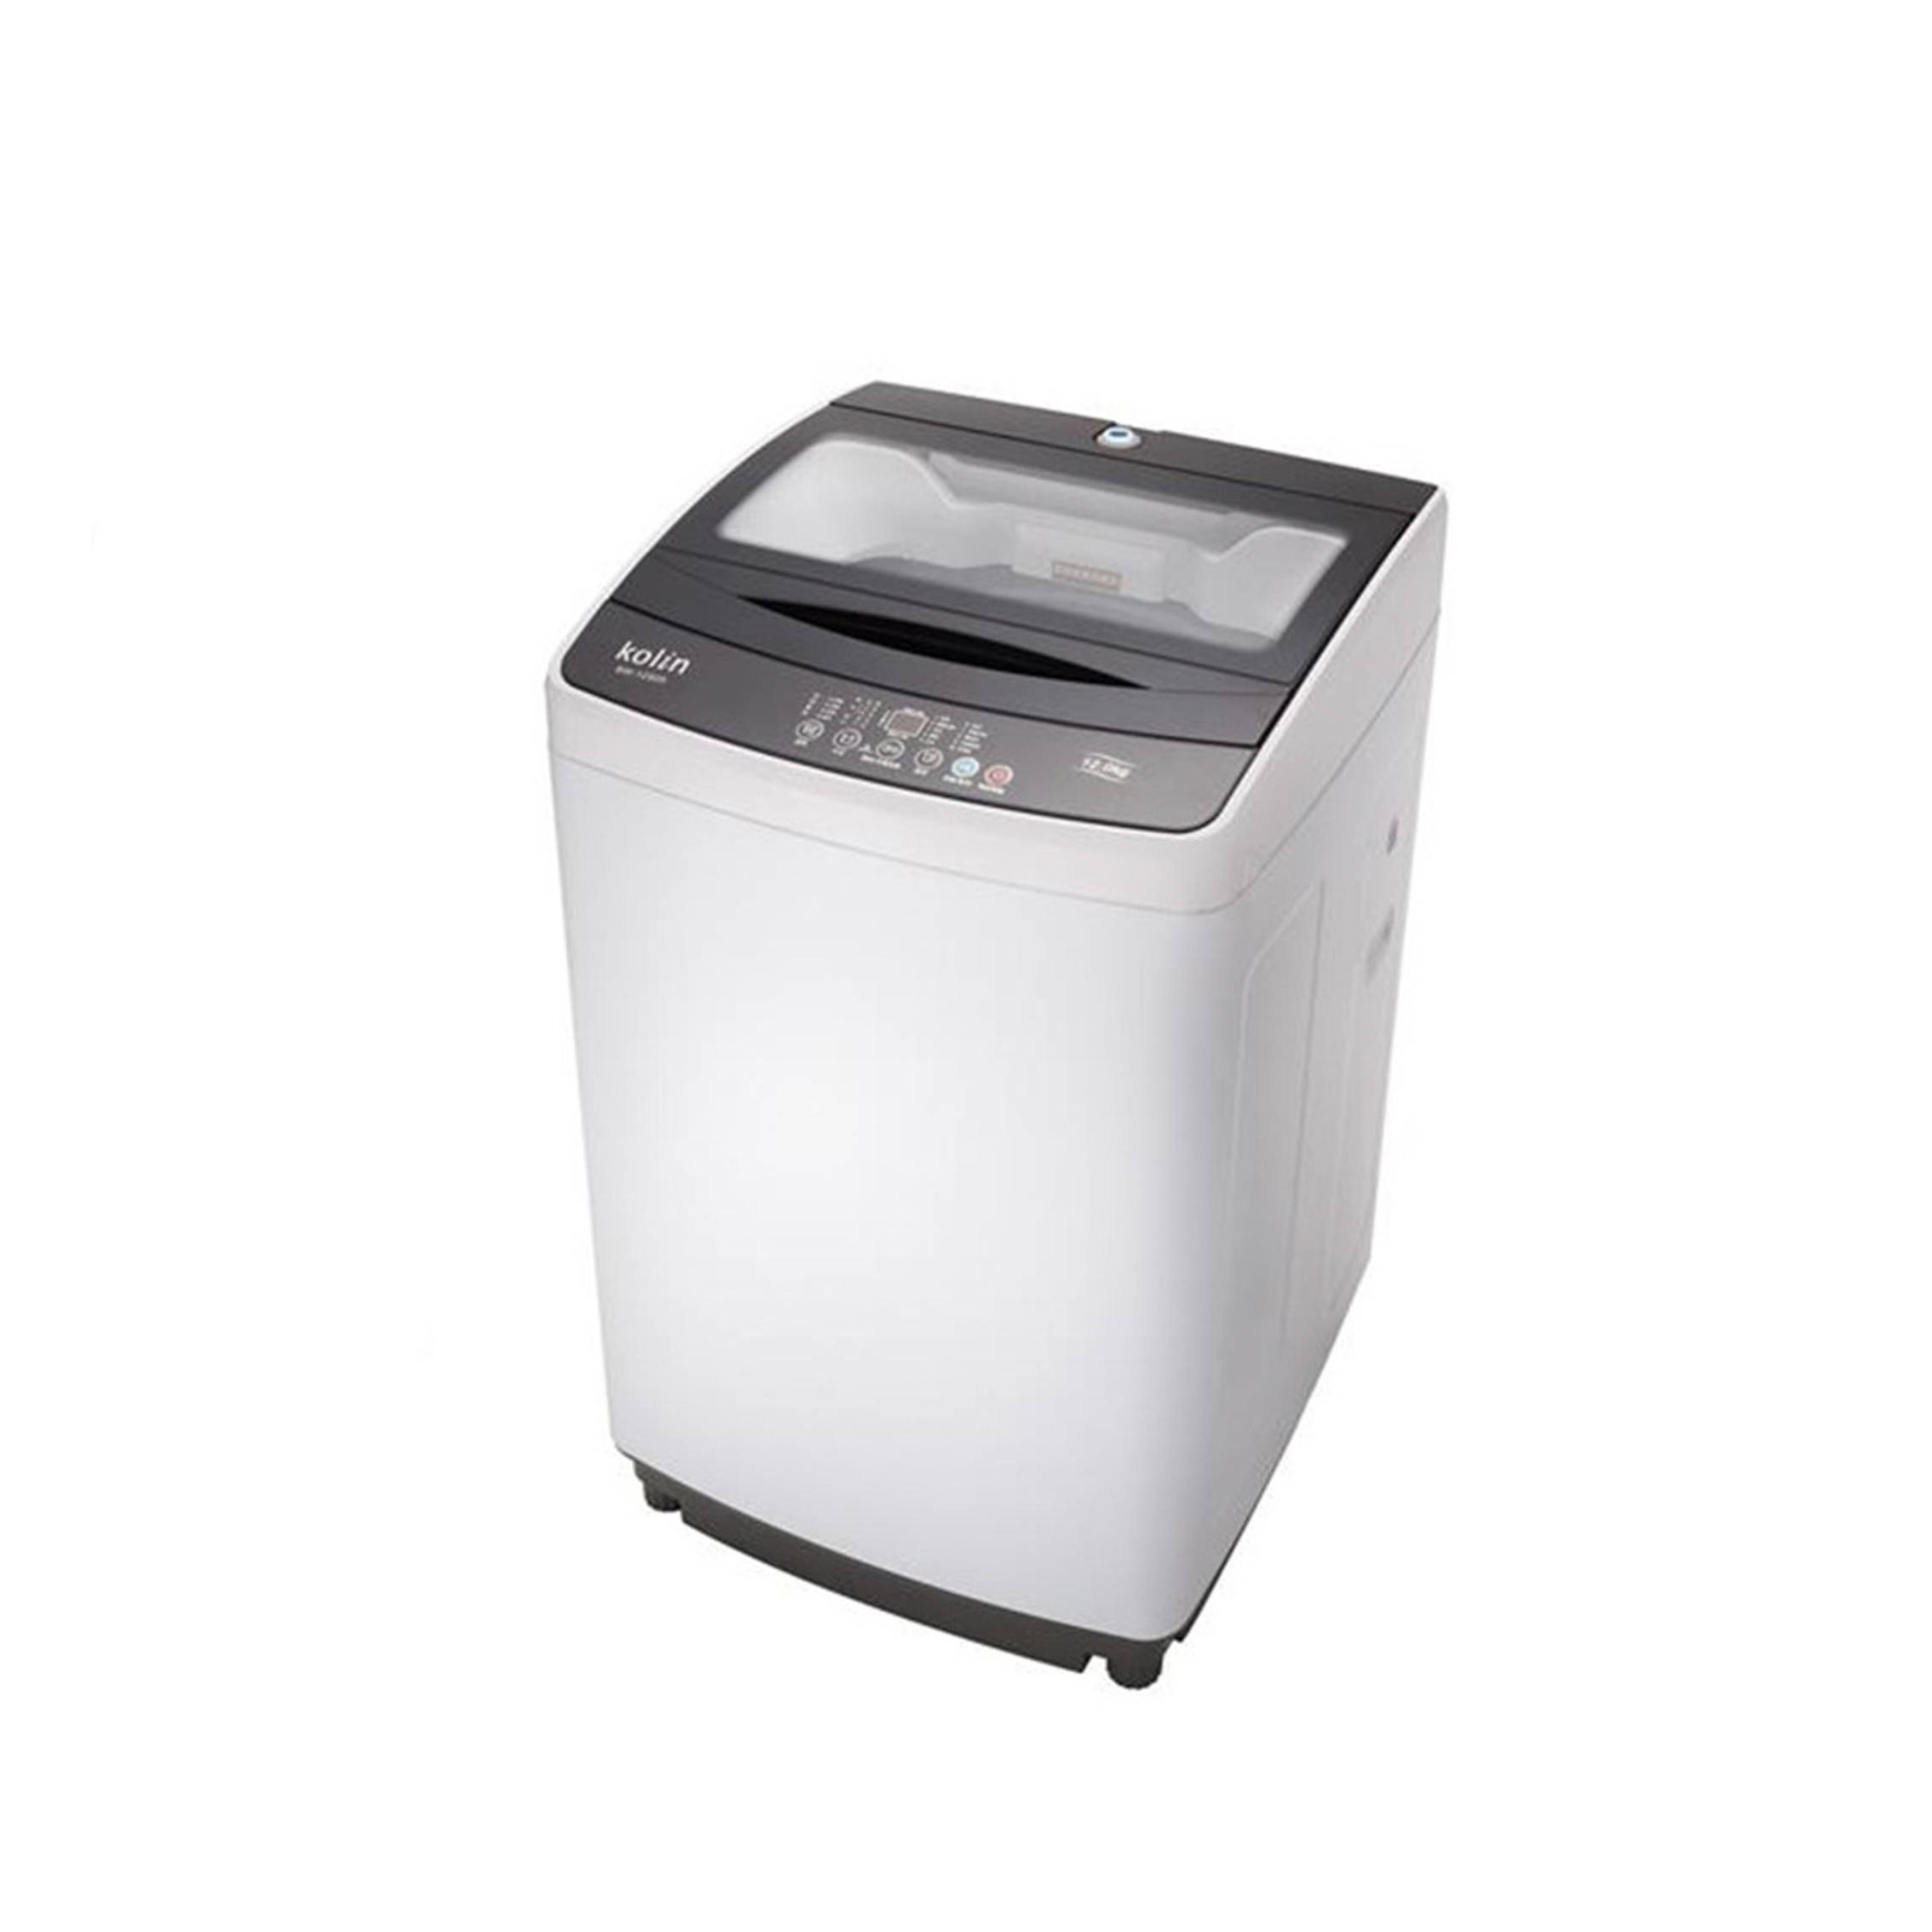 KOLIN 歌林 12公斤 單槽全自動洗衣機 BW-12S05 免卡分期